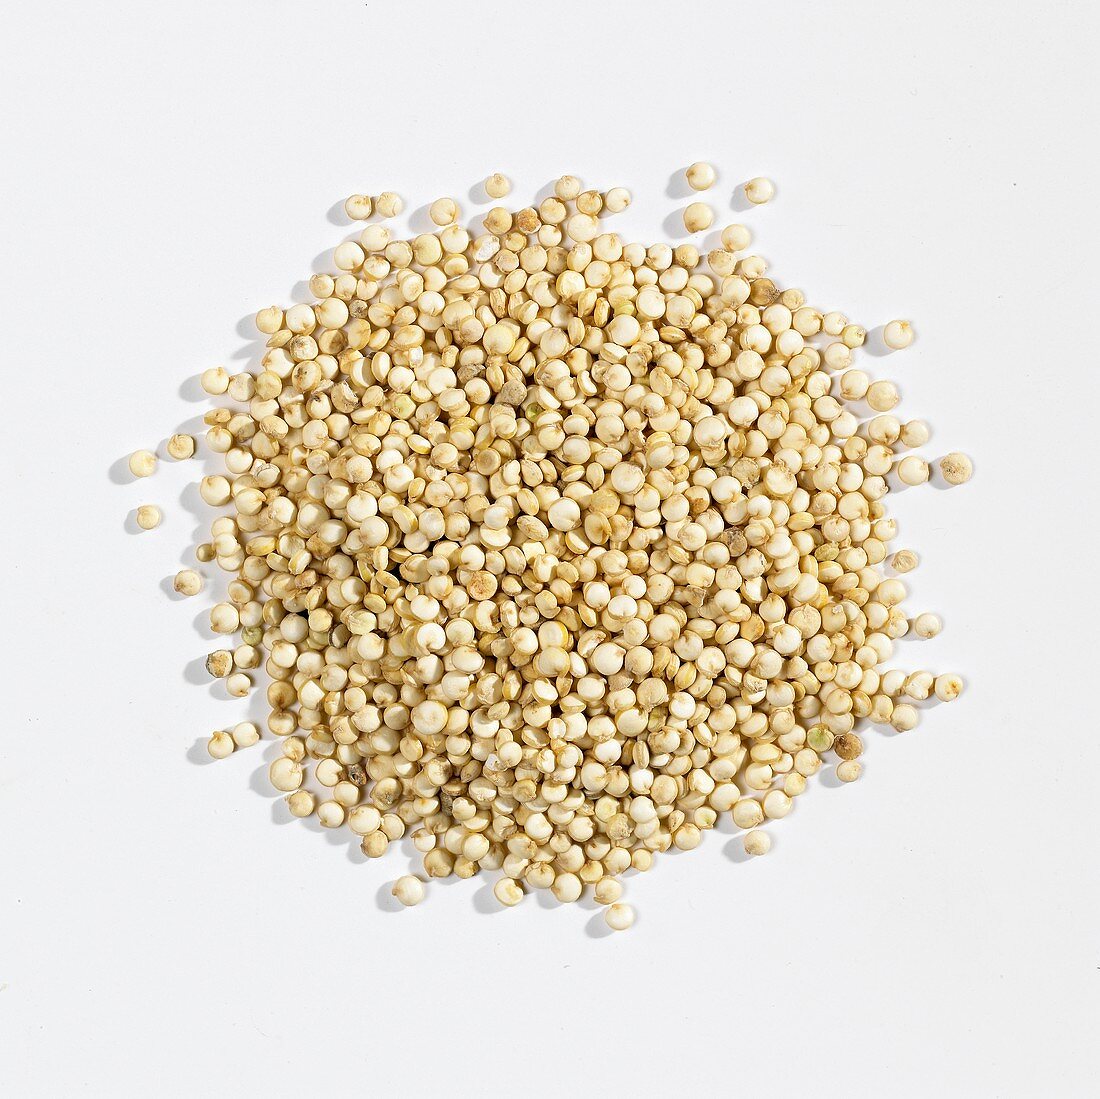 A heap of quinoa